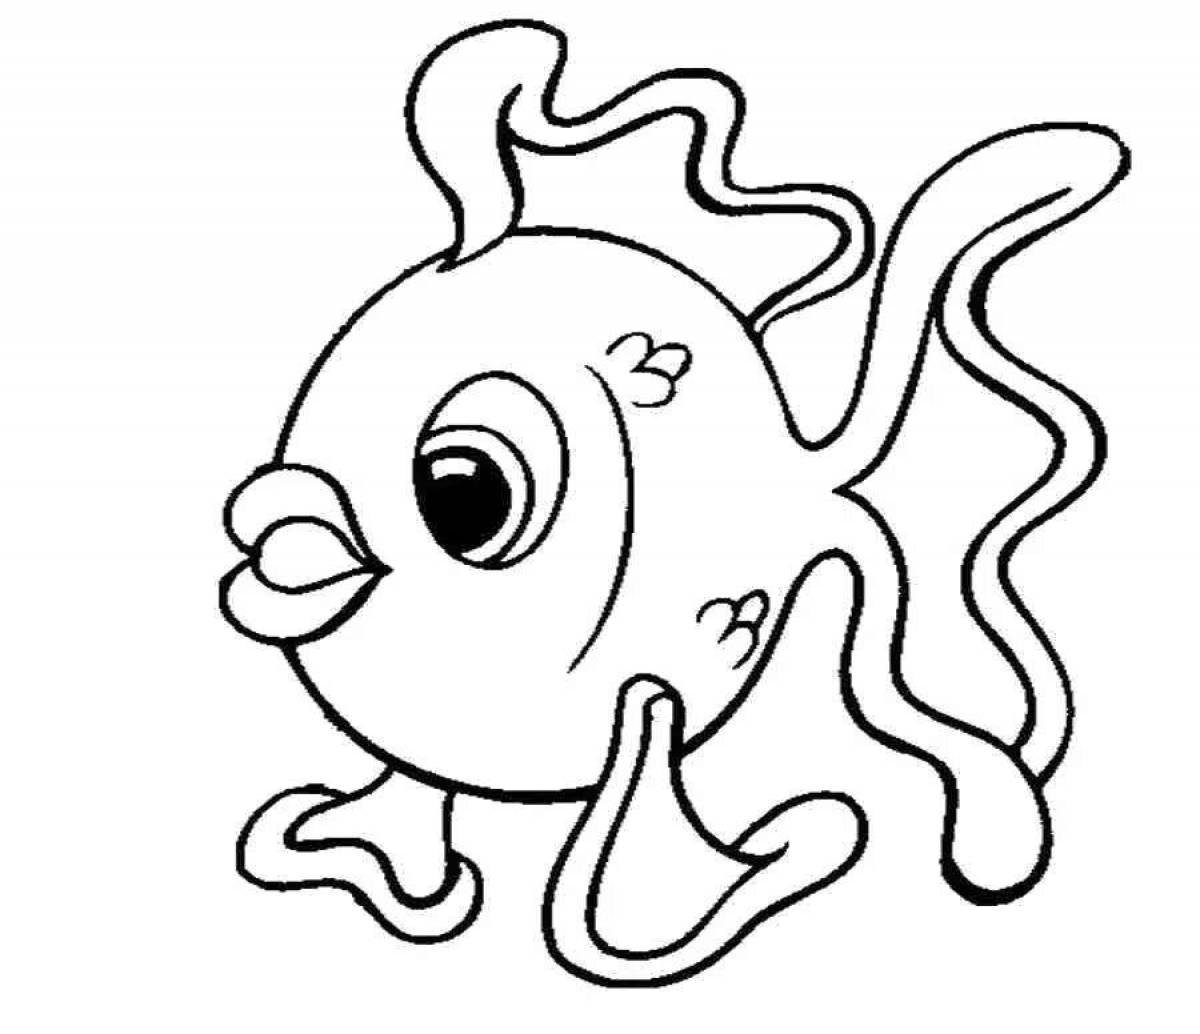 Exuberant goldfish drawing